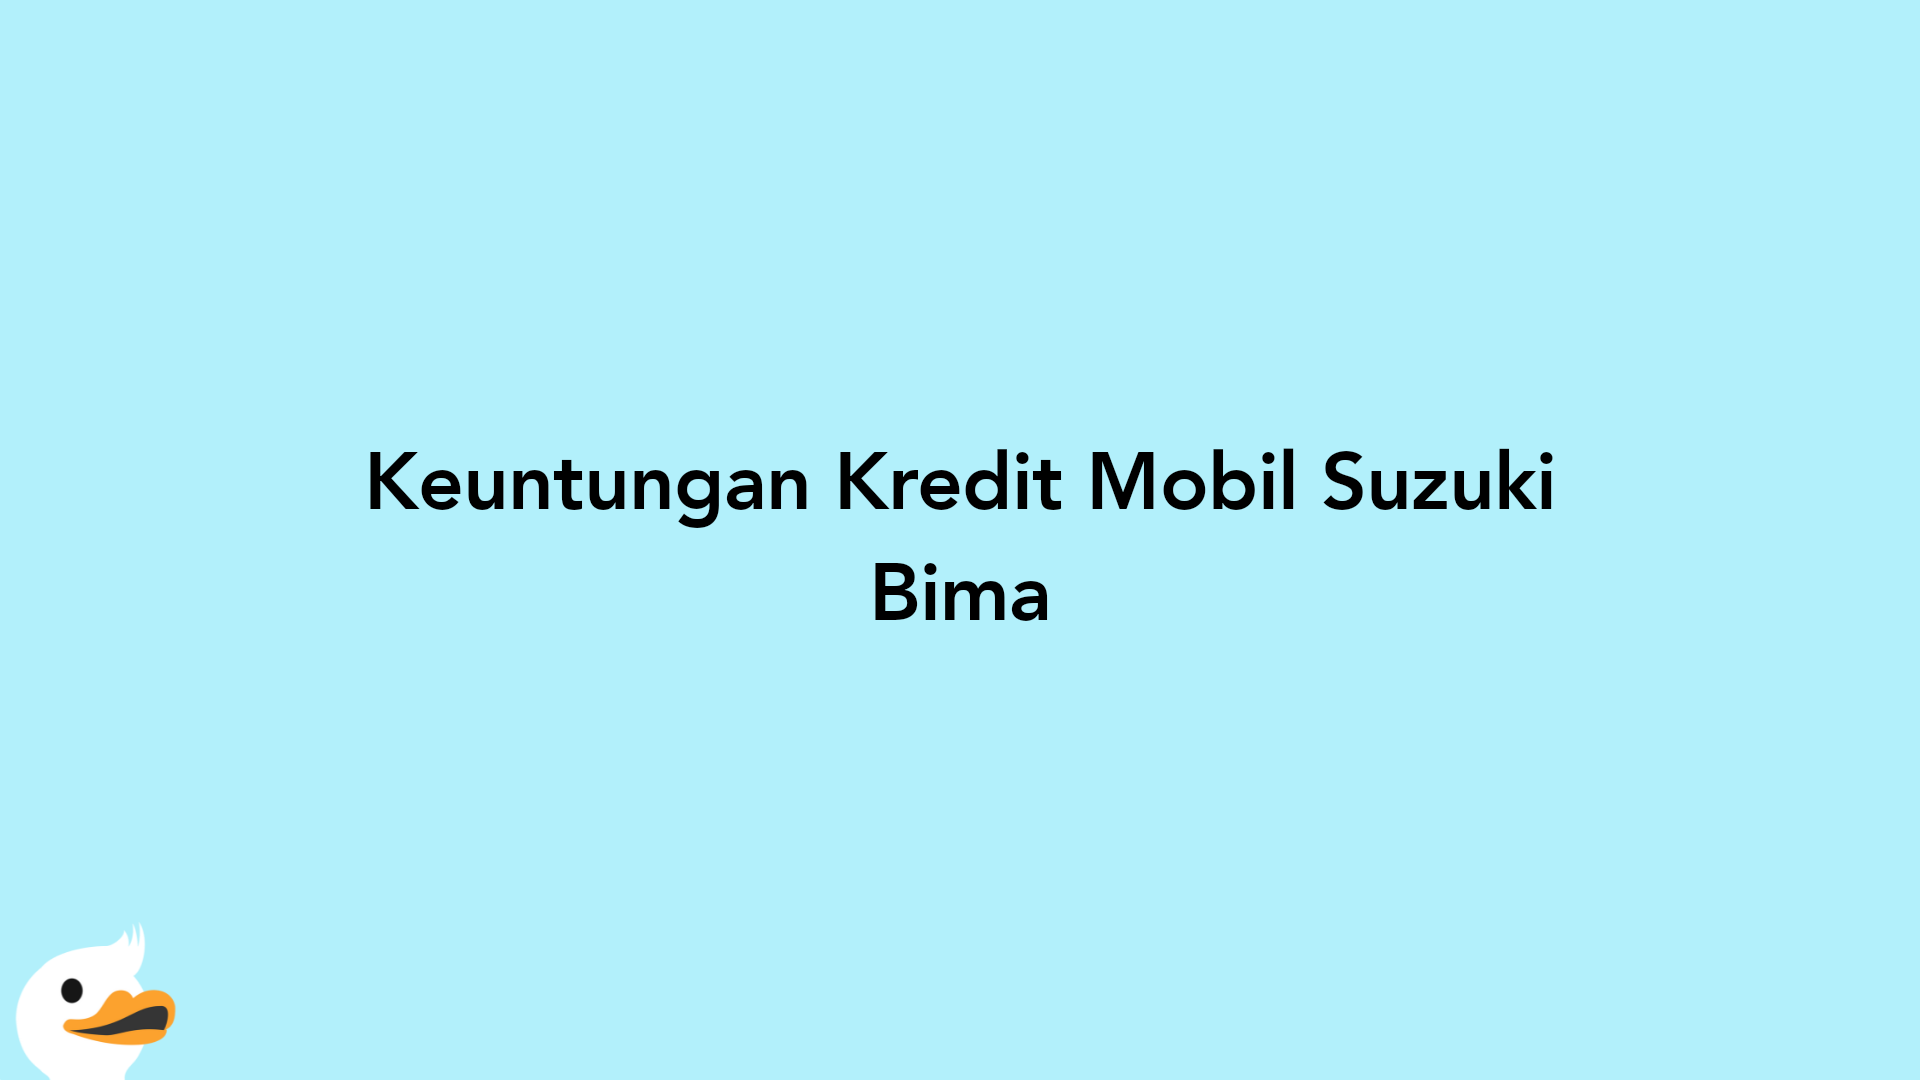 Keuntungan Kredit Mobil Suzuki Bima